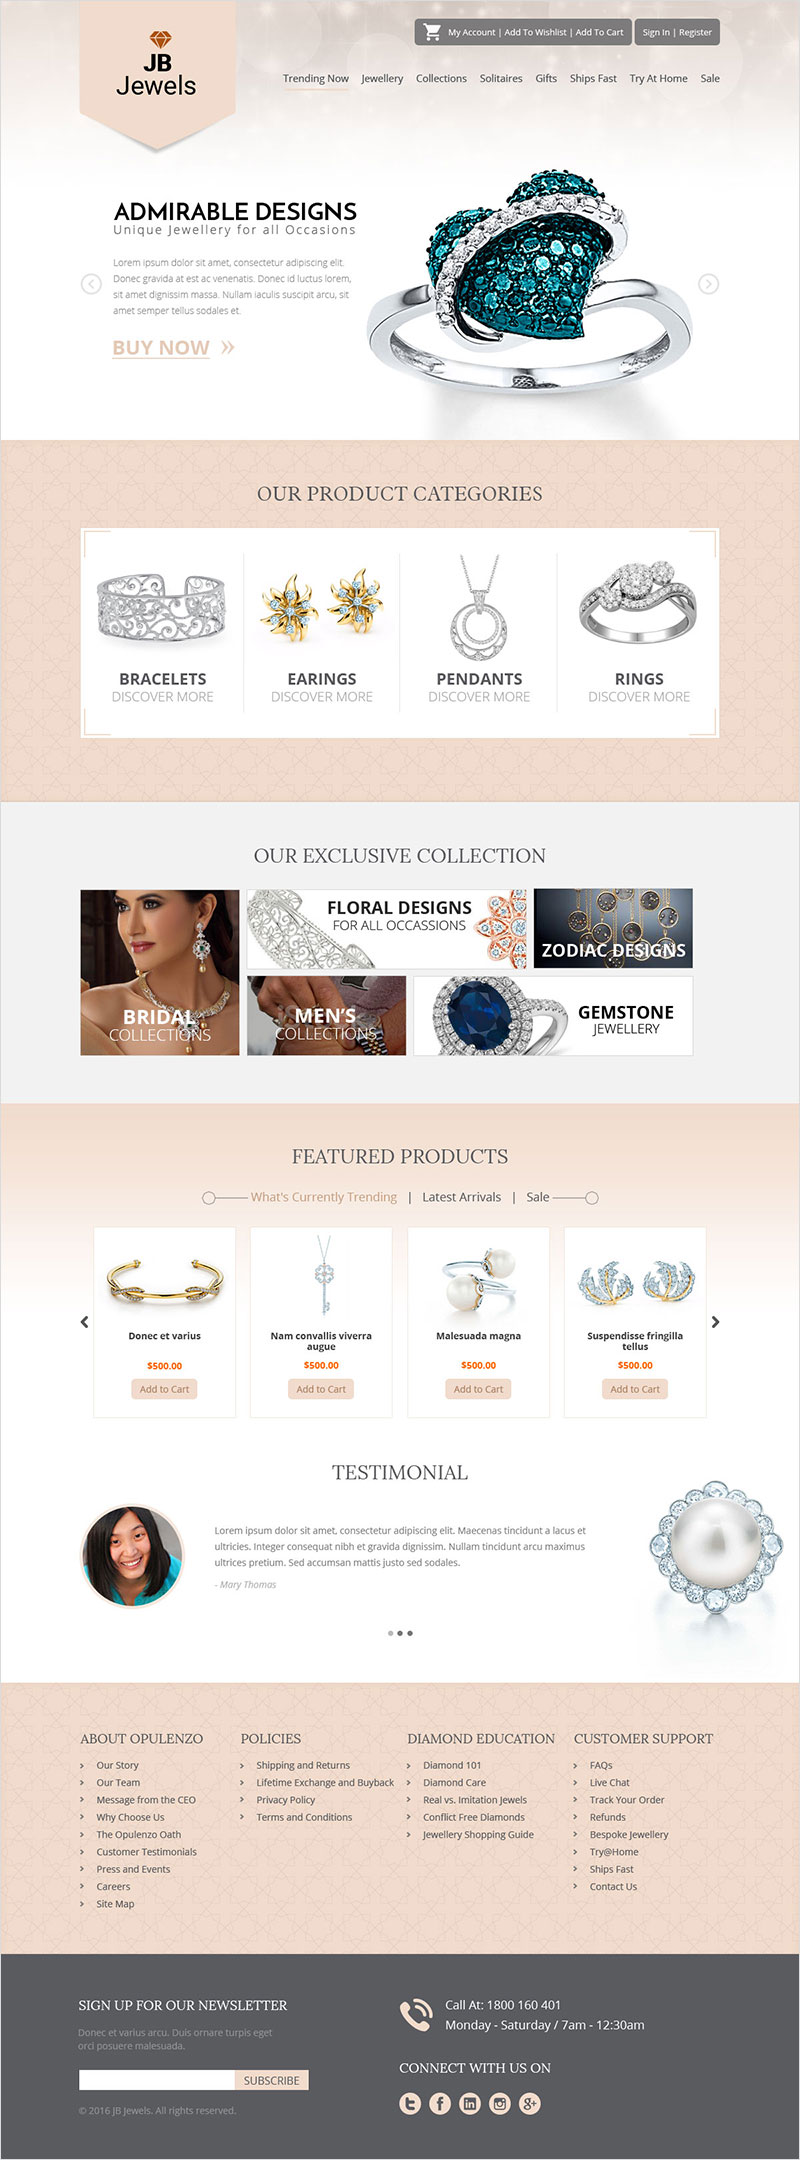 JB Jewels - Website Design